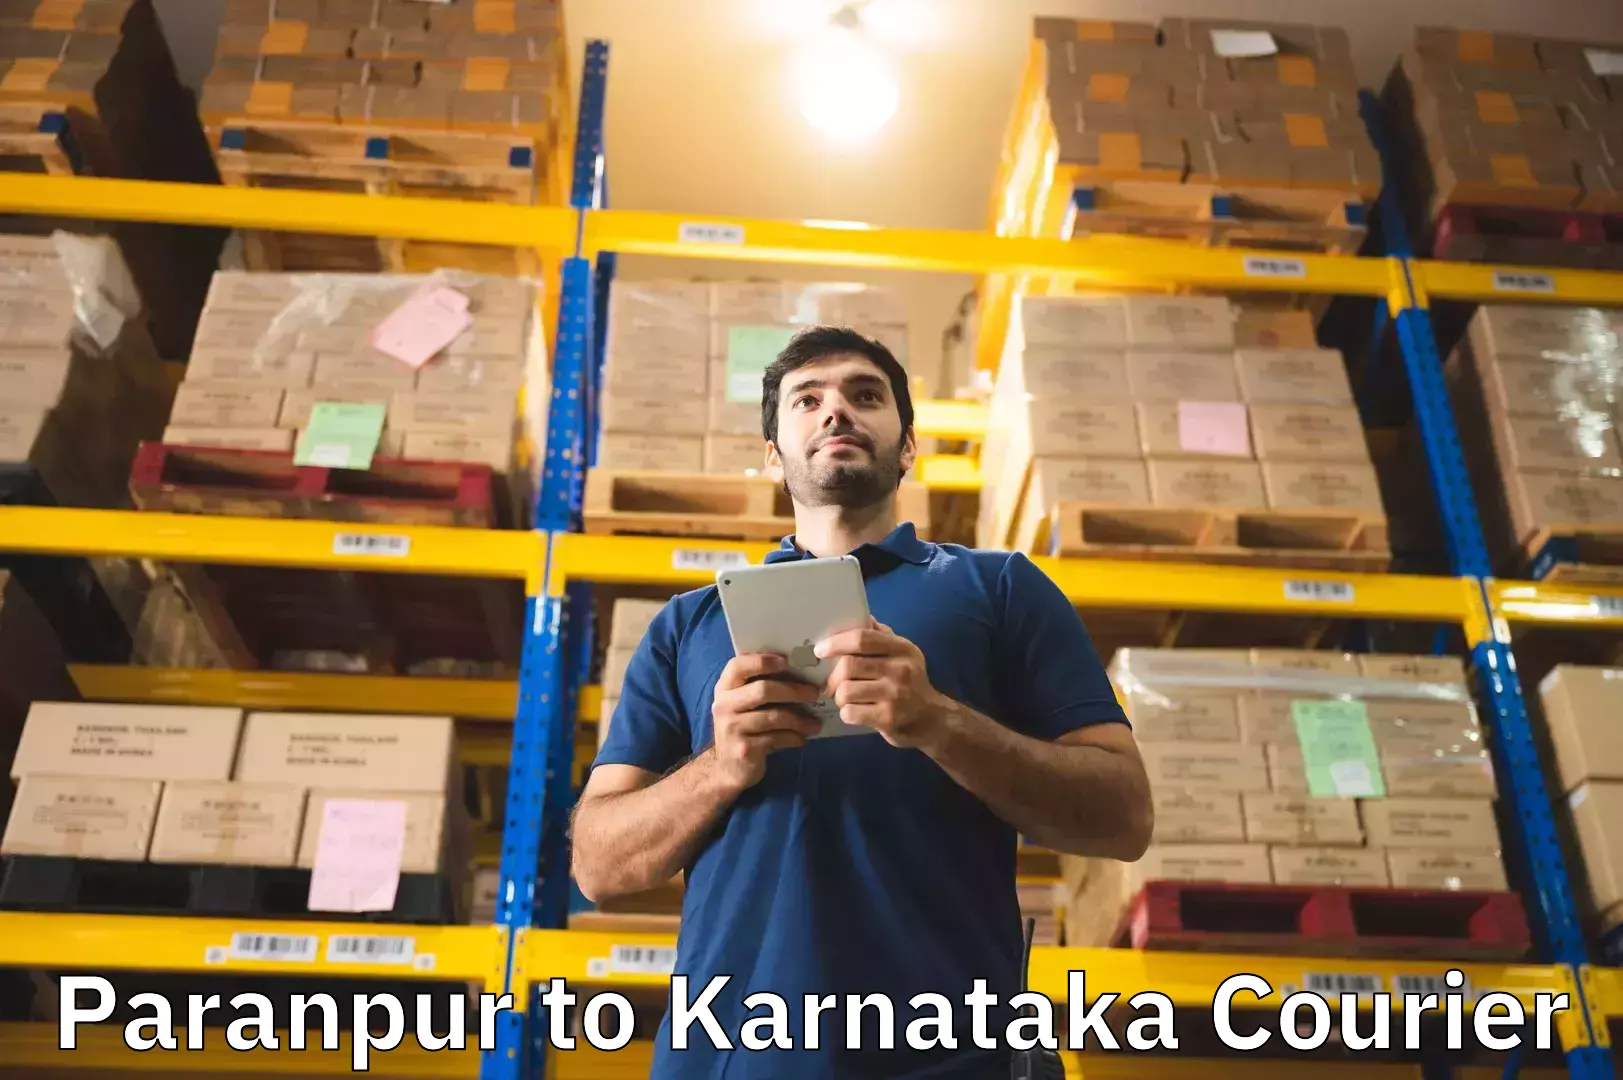 Personal effects shipping in Paranpur to Khanapur Karnataka